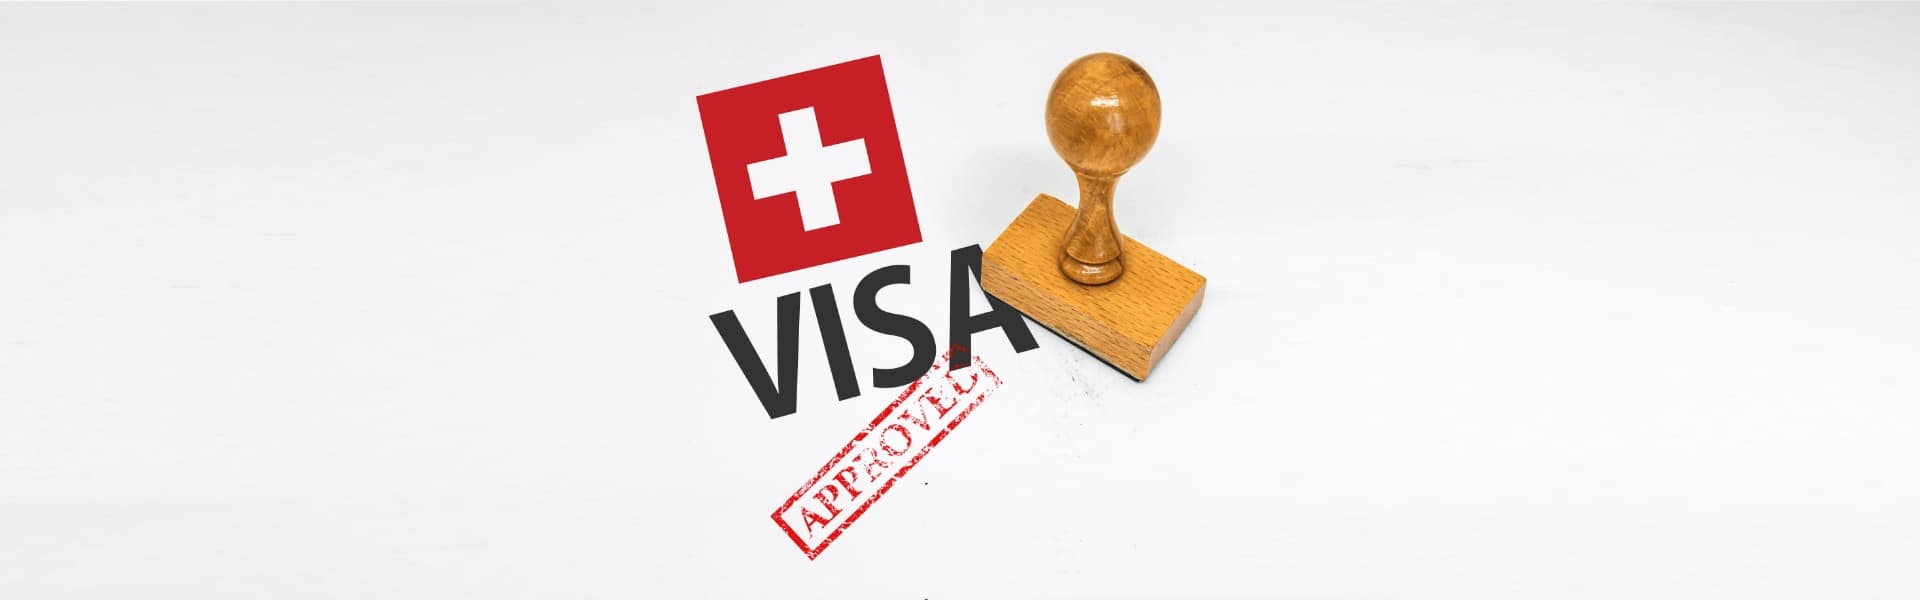 Switzerland student visa